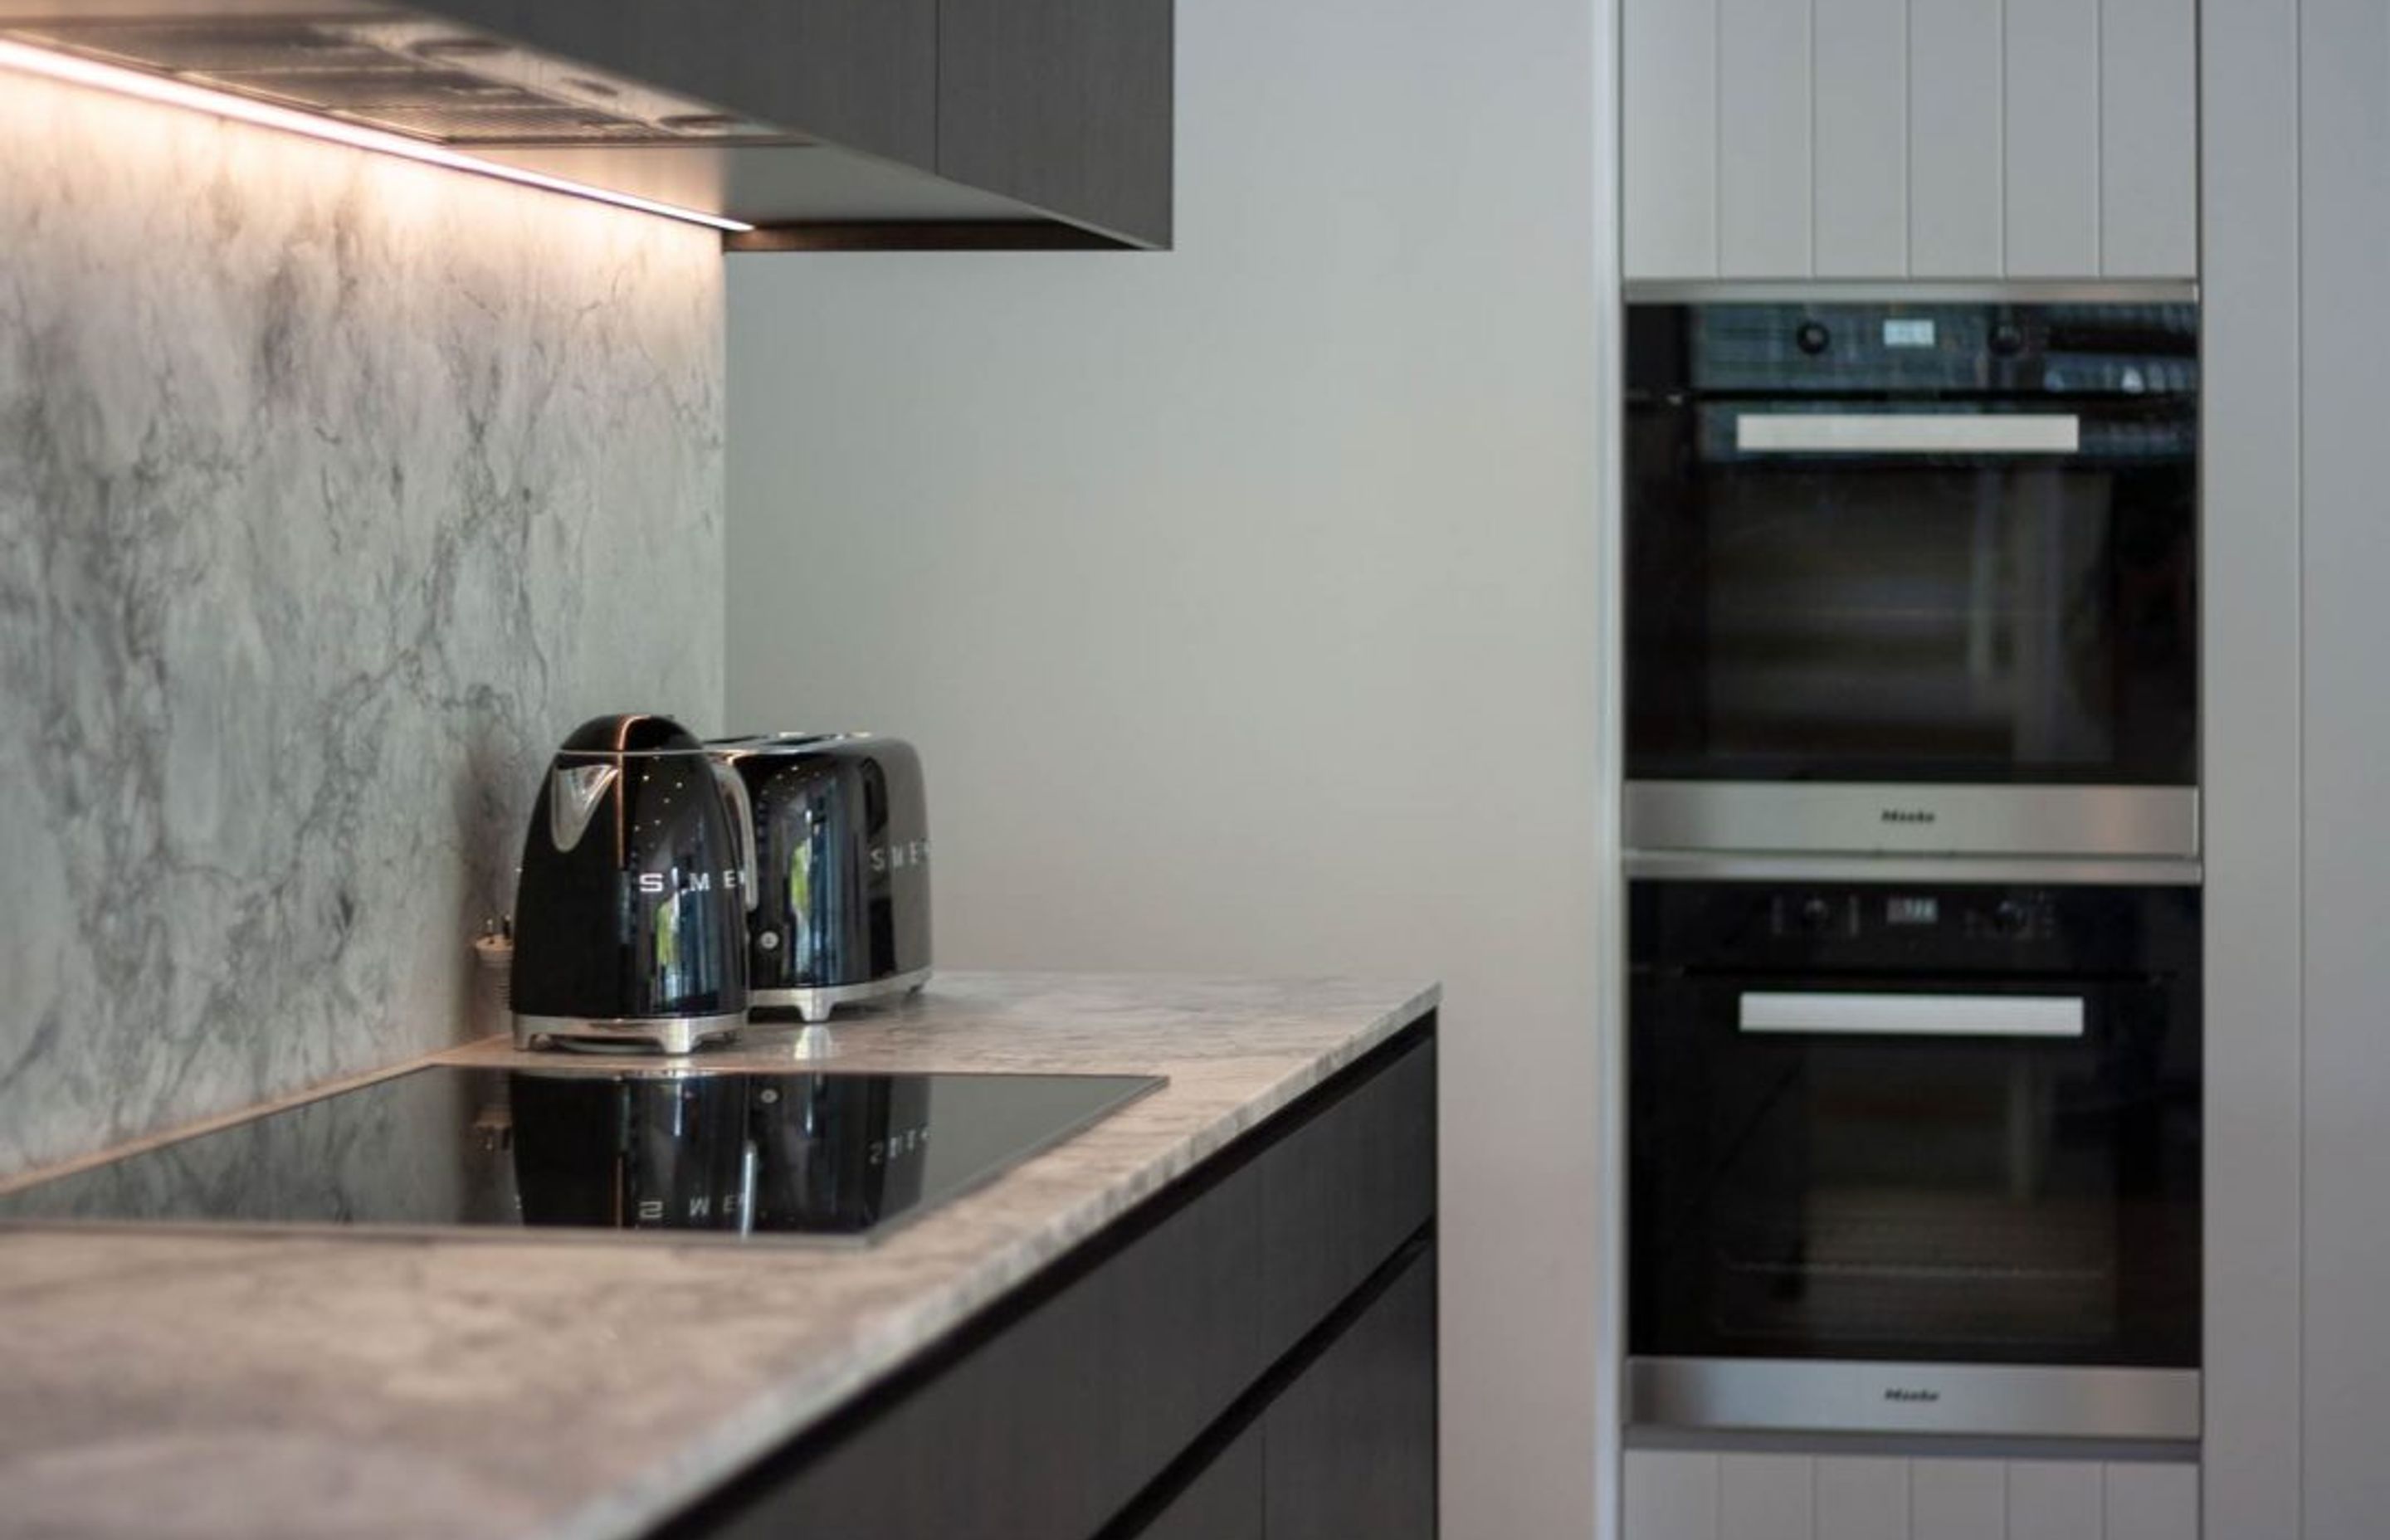 dulux-polyurethane-v-groove-grey-dark-kitchen-design-miele-smeg-butlers-pantry-7215-1-1084x723.jpg